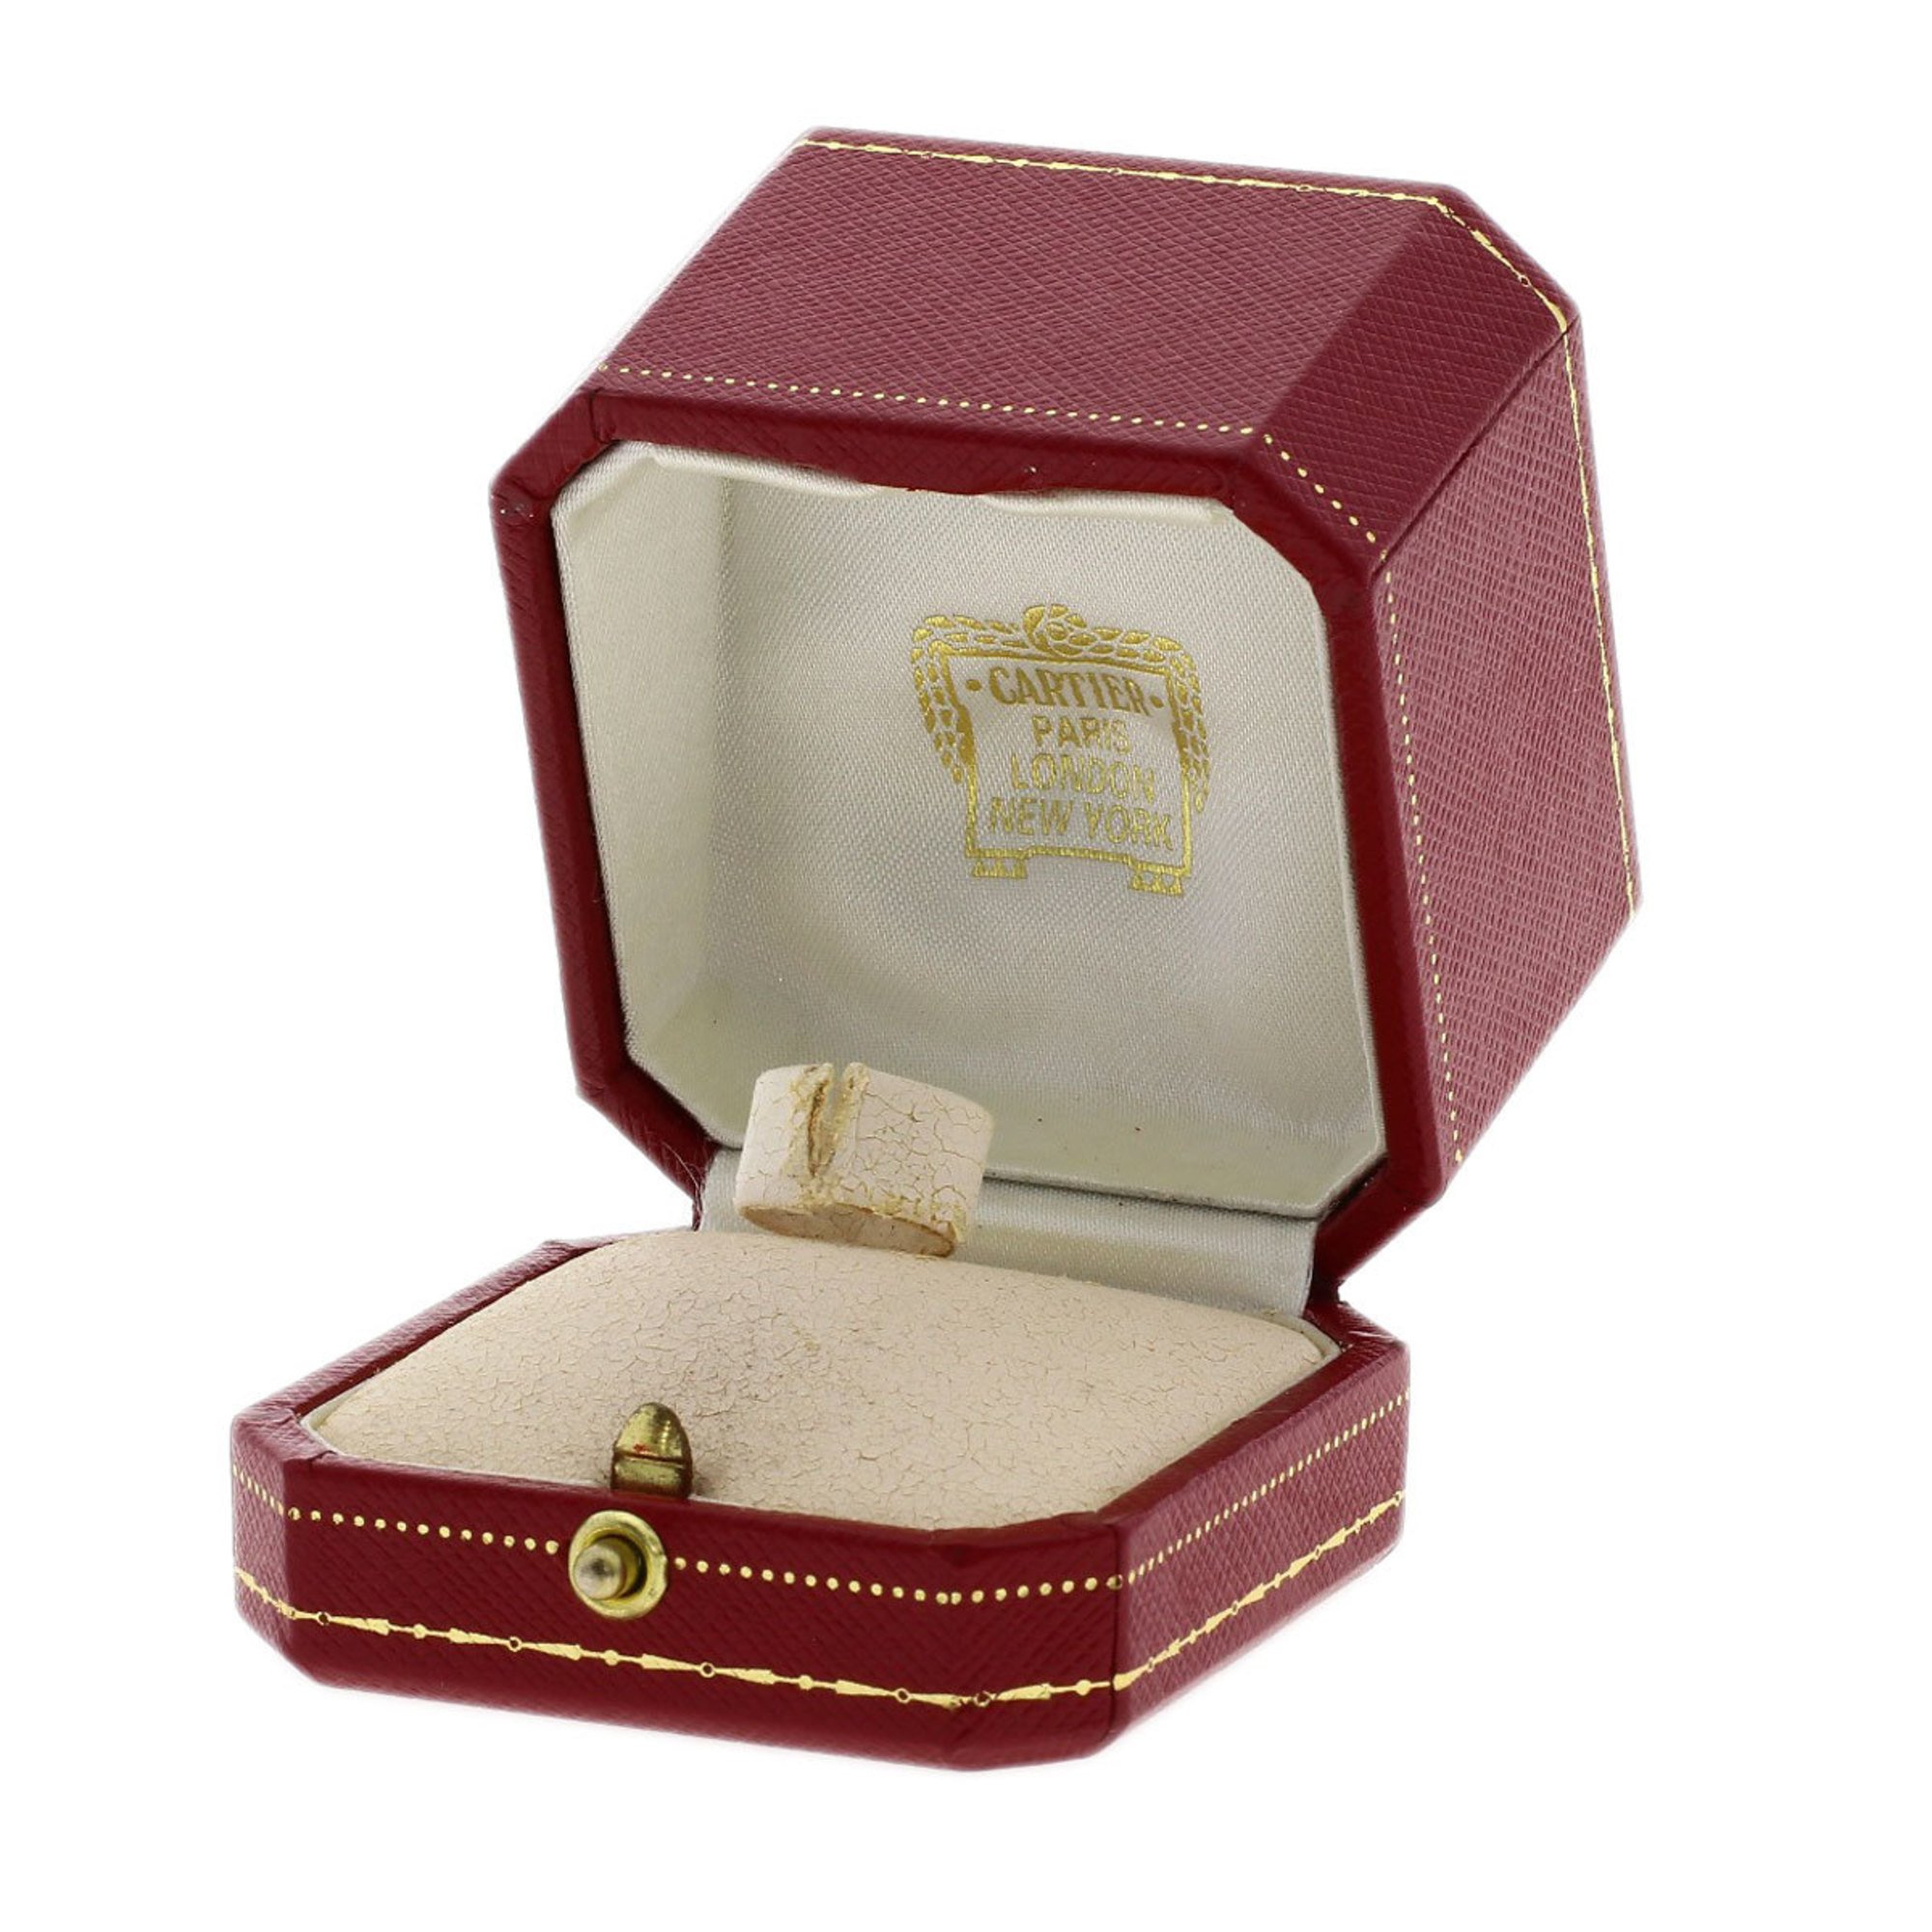 Cartier C2 Diamond #48 Ring, 18K White Gold, Women's, CARTIER